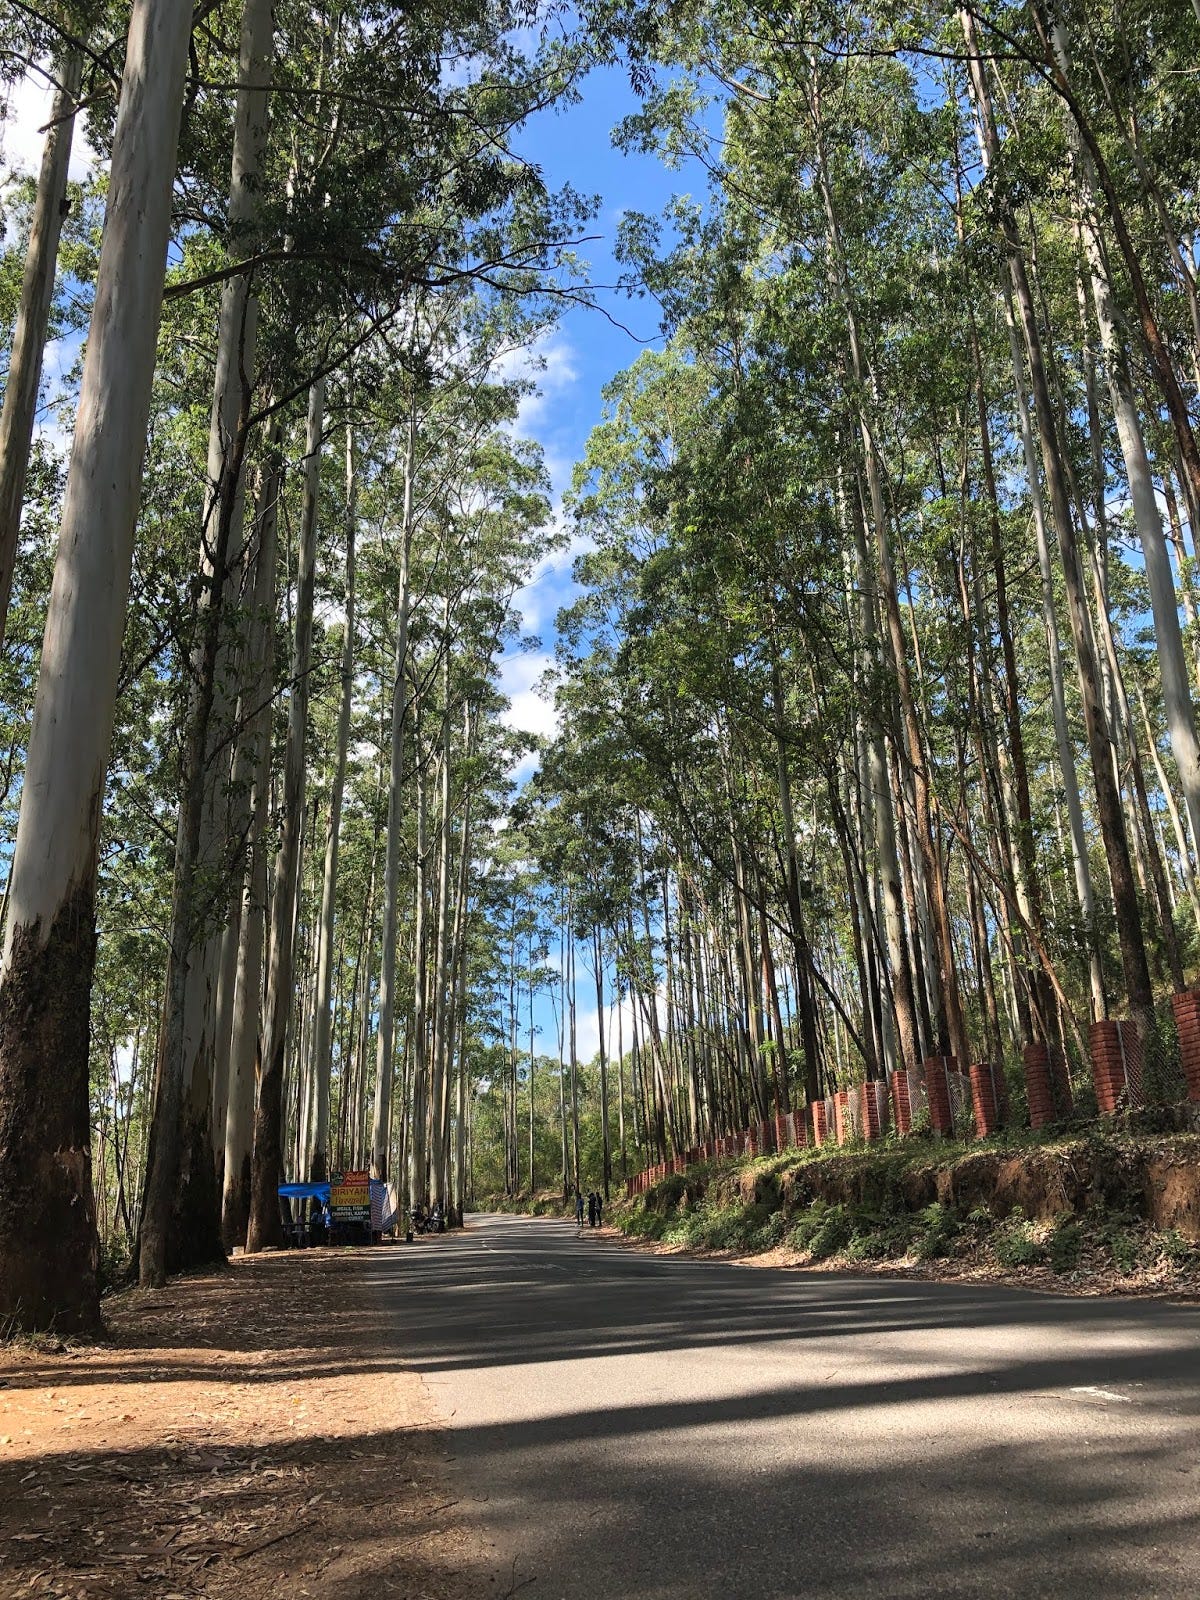 Pine forest on the way to Vattavada